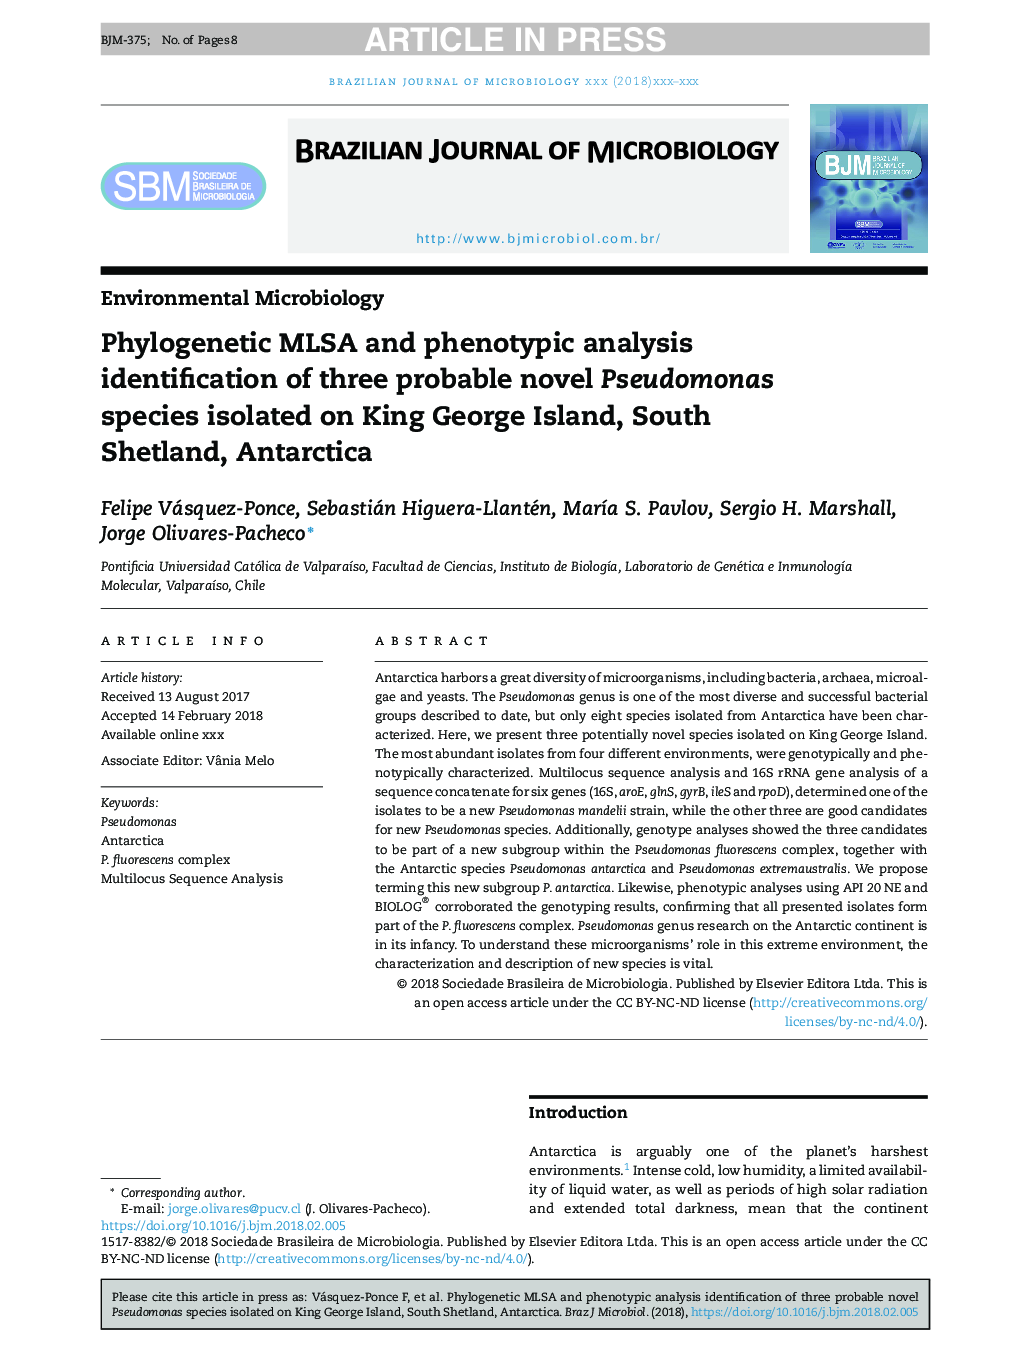 Phylogenetic MLSA and phenotypic analysis identification of three probable novel Pseudomonas species isolated on King George Island, South Shetland, Antarctica